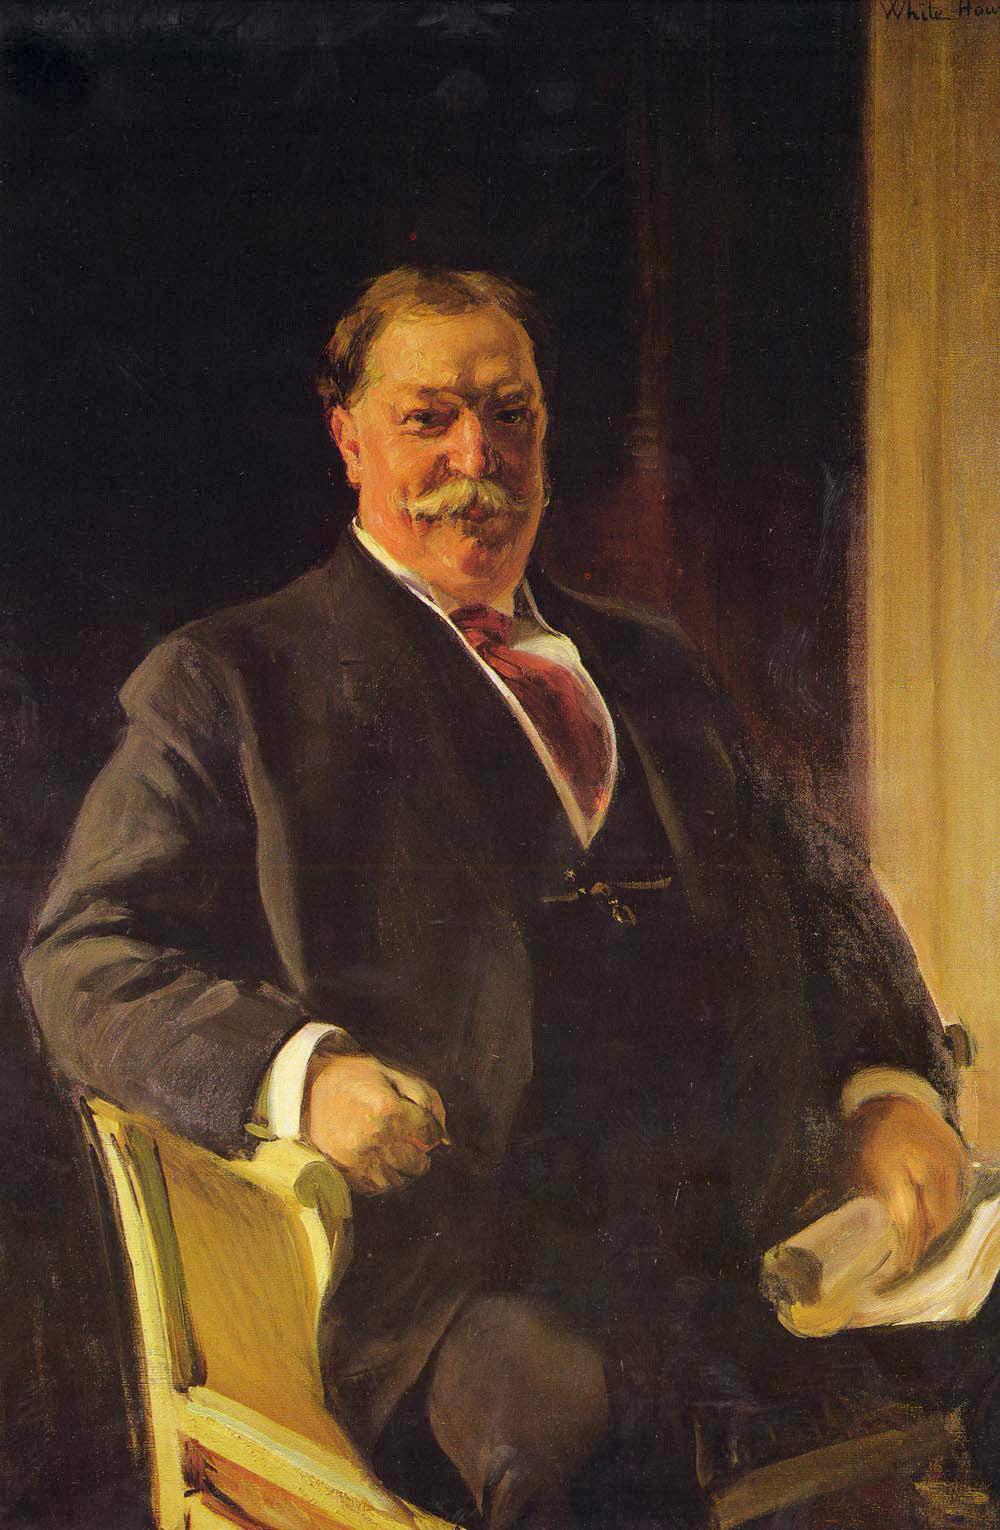 Portrait of Mr. Taft, President of the United States